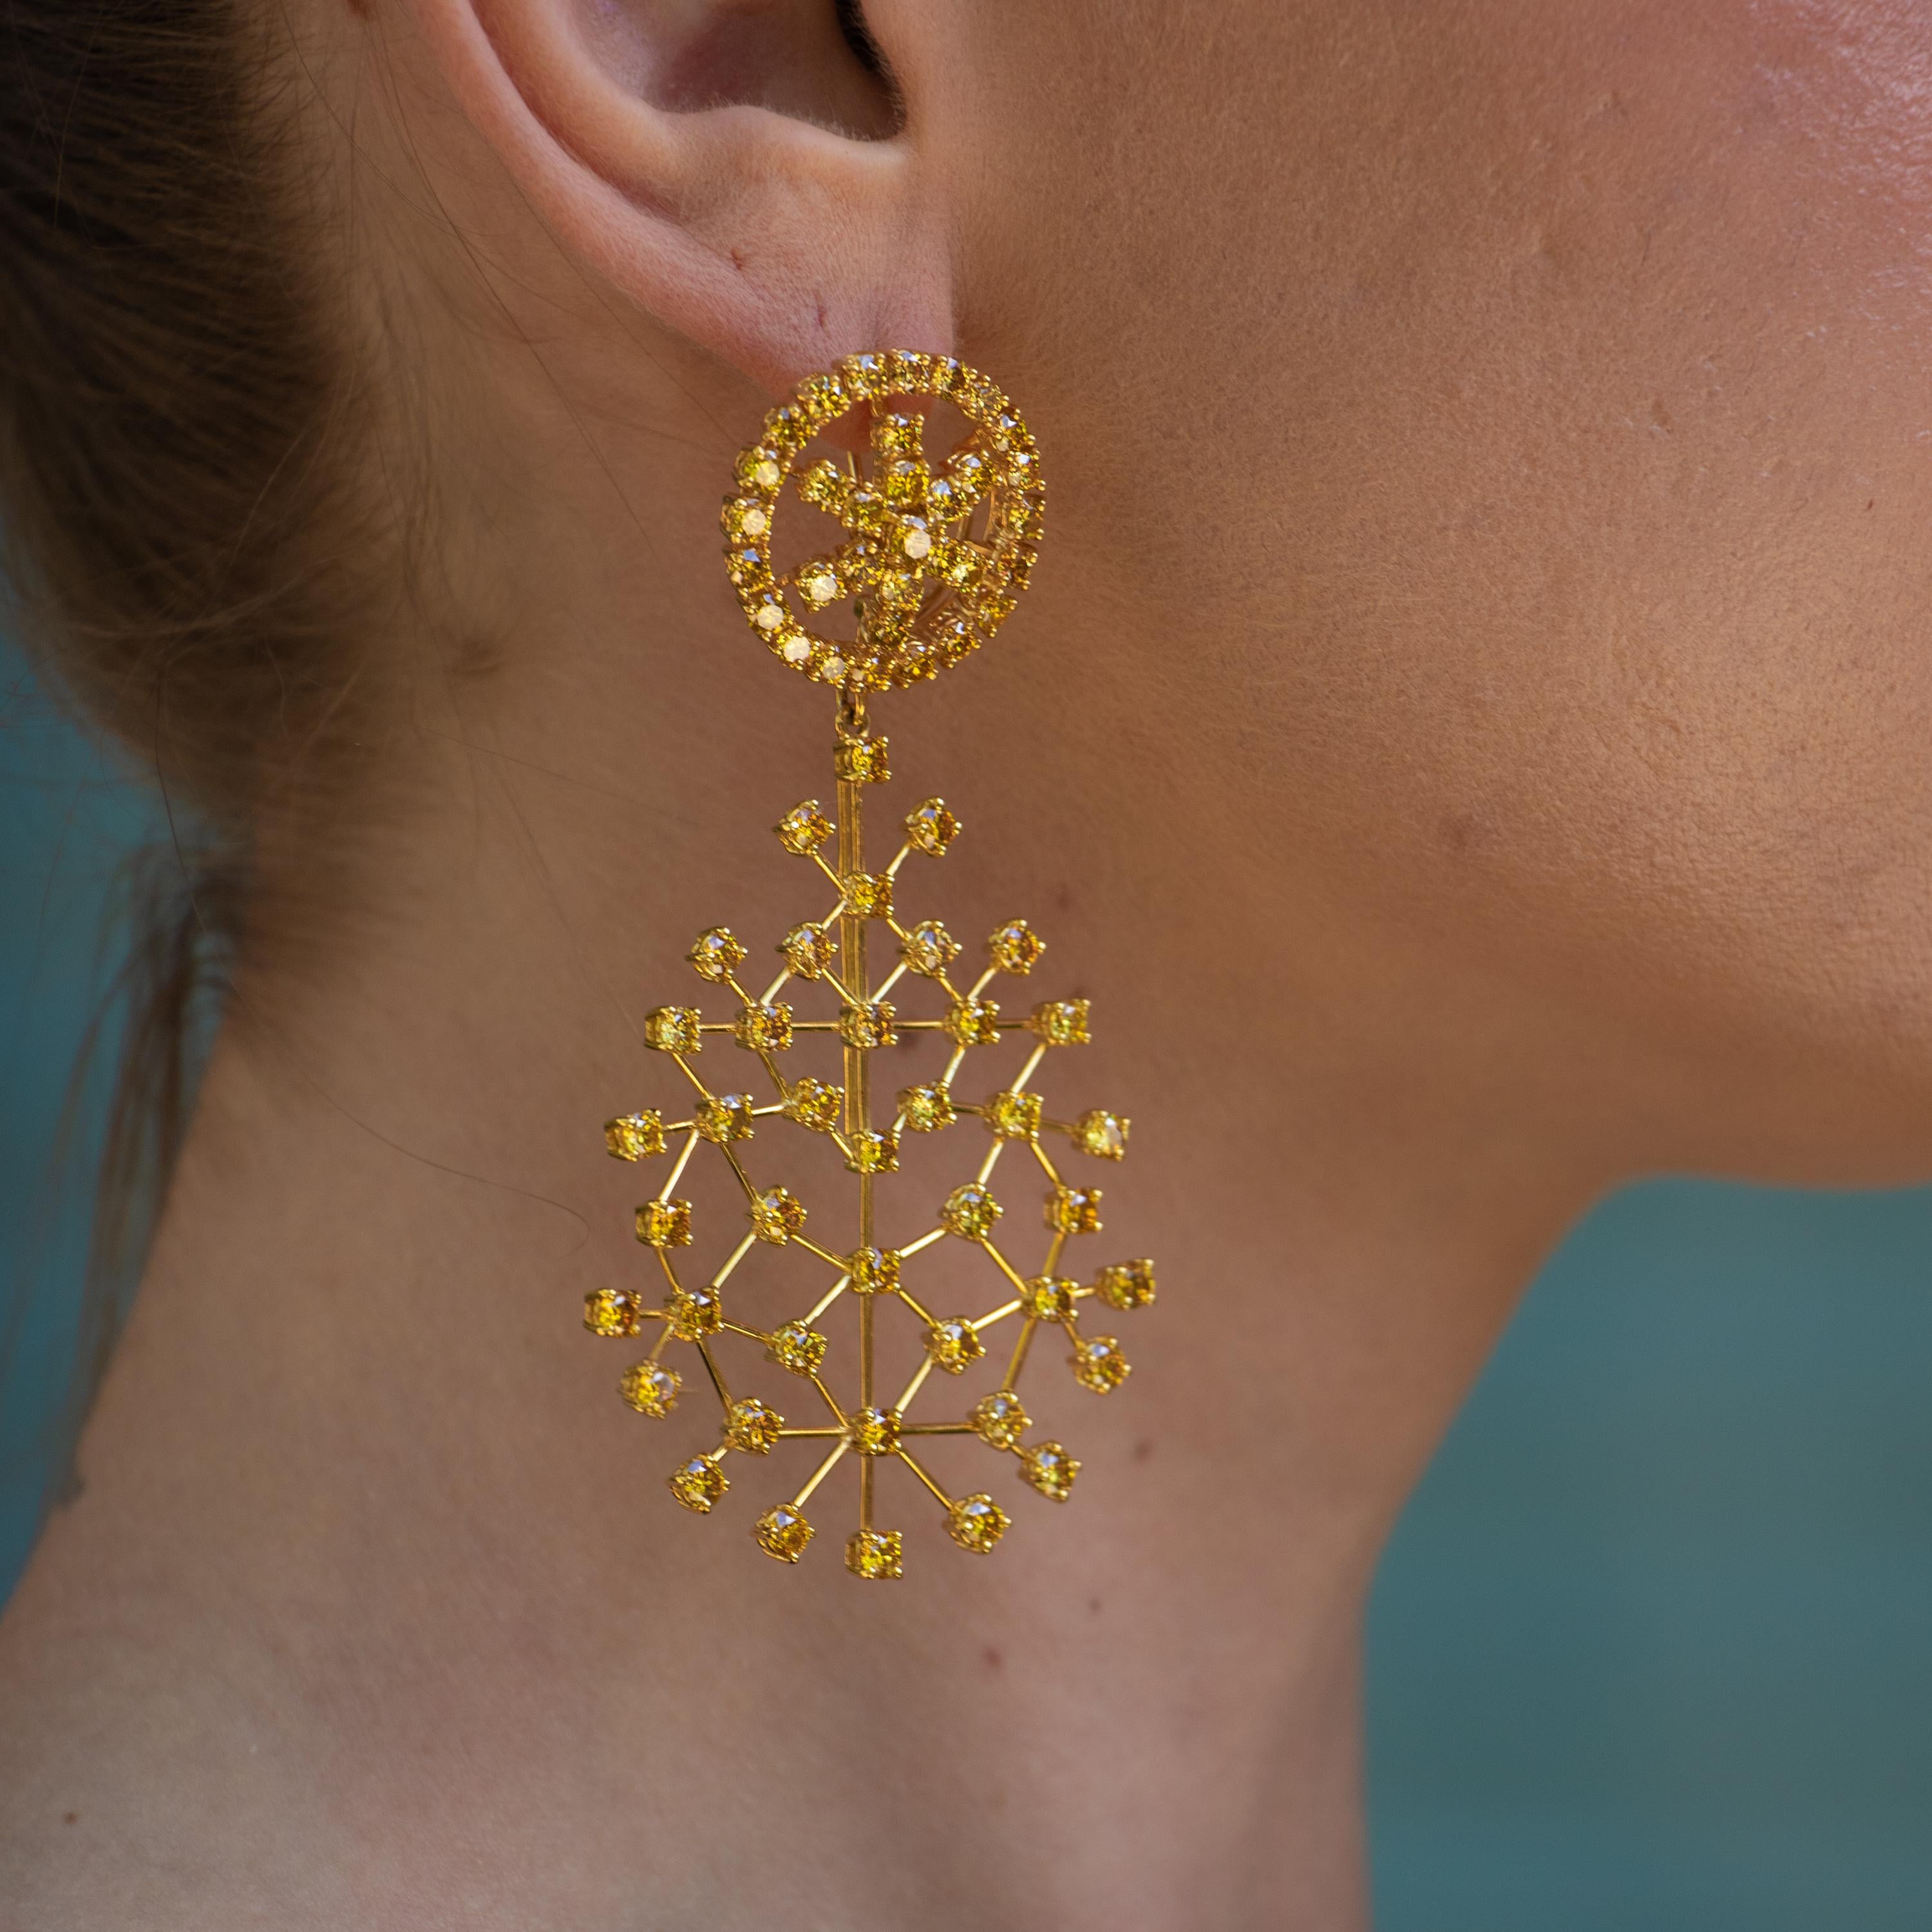 10.8 ct diamond earrings